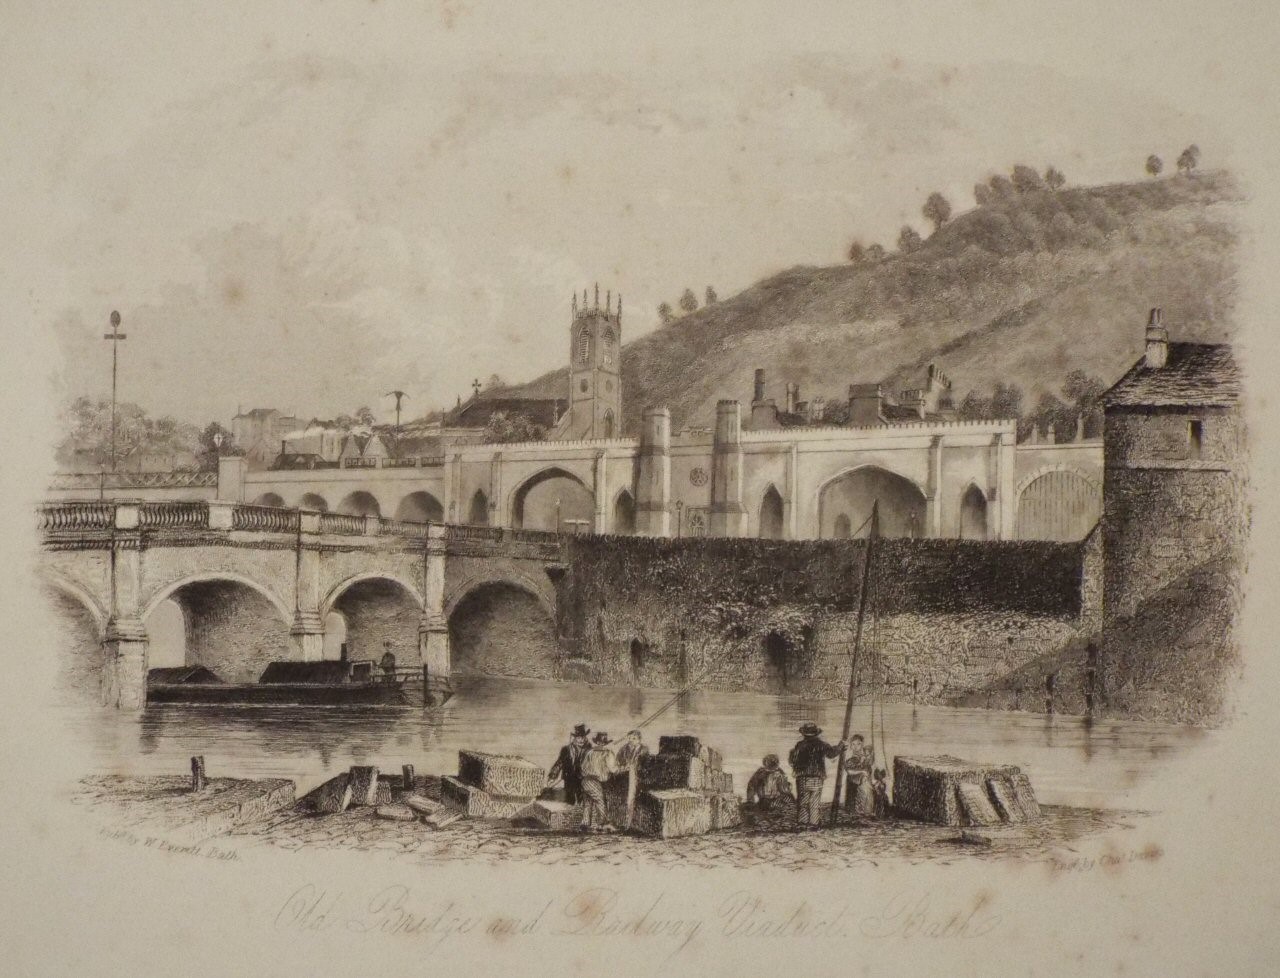 Steel Vignette - Old Bridge and Railway Viaduct, Bath